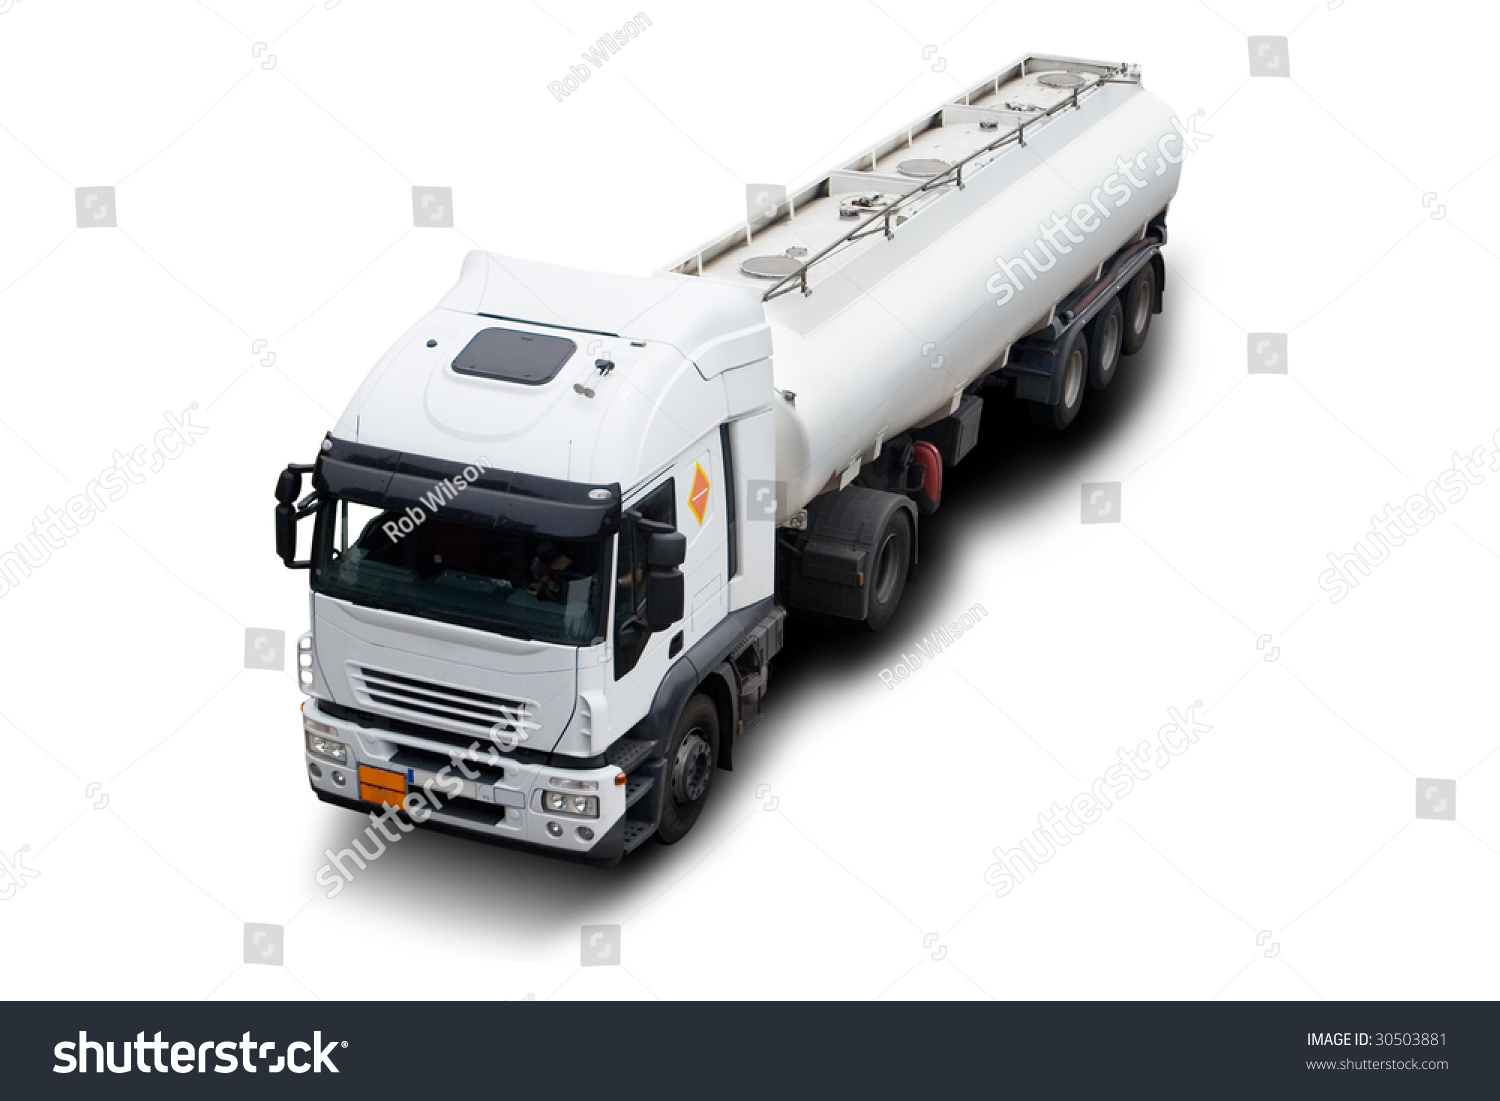 Fuel Tanker Truck Stock Photo 30503881 : Shutterstock